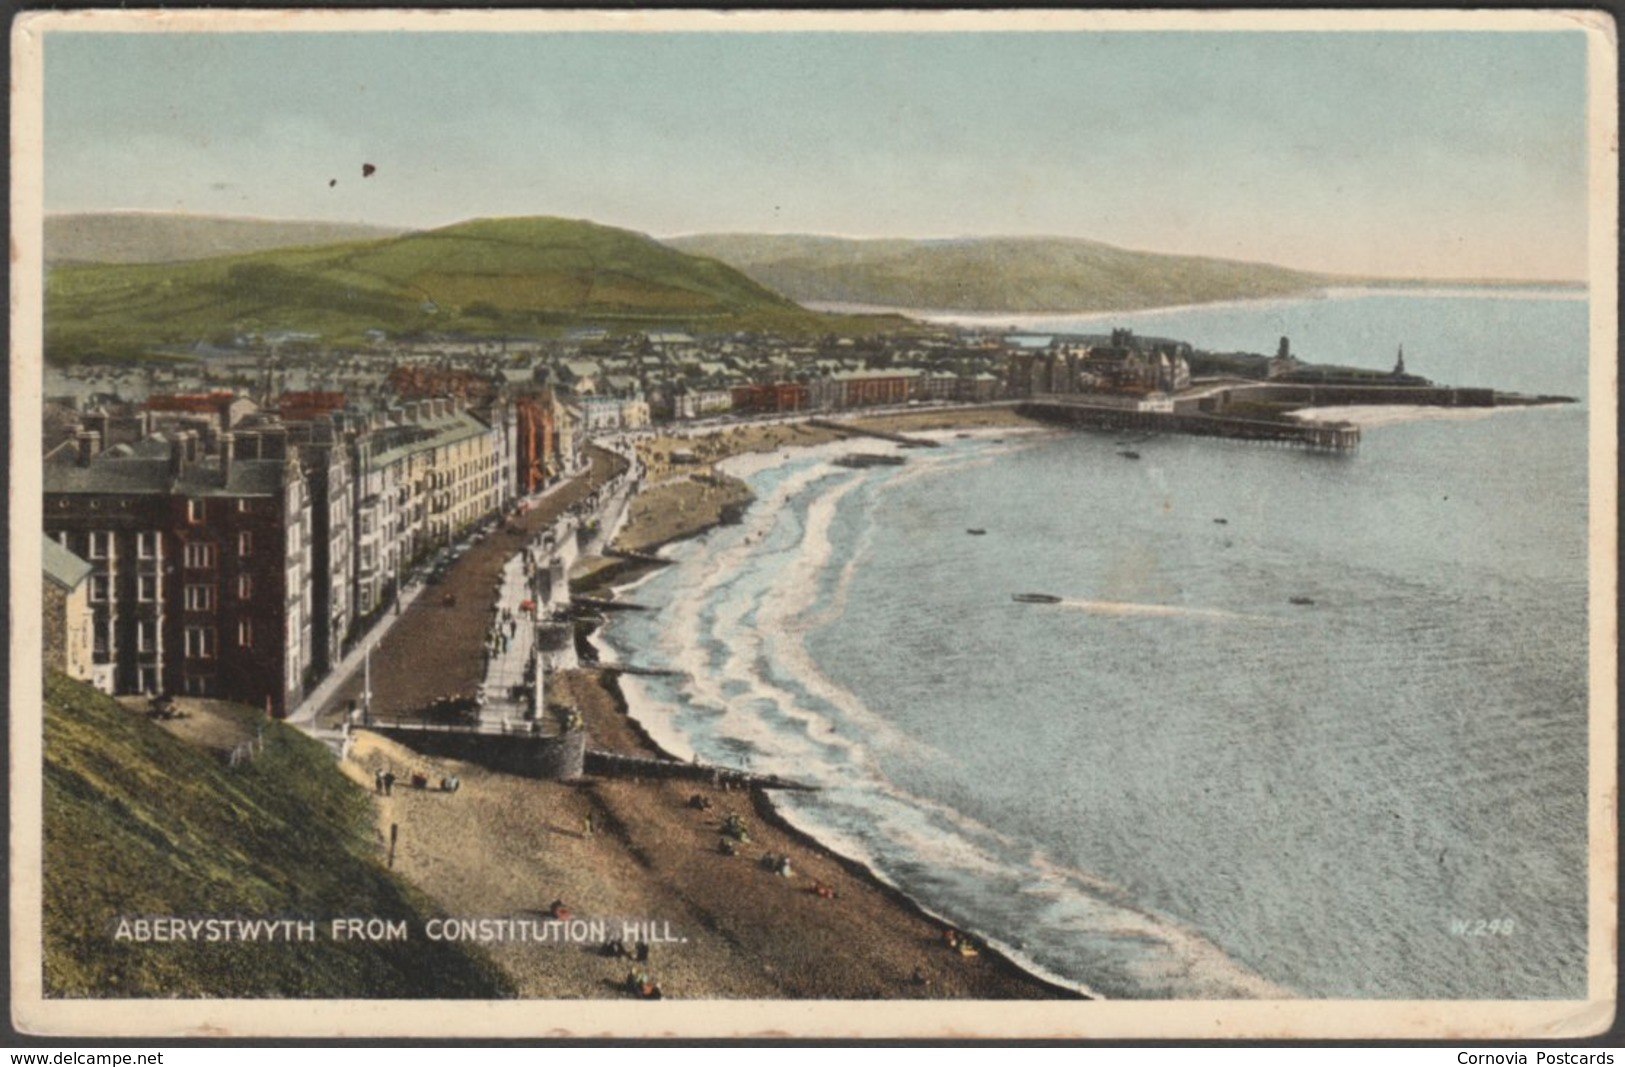 Aberystwyth From Constitution Hill, Cardiganshire, 1935 - Postcard - Cardiganshire